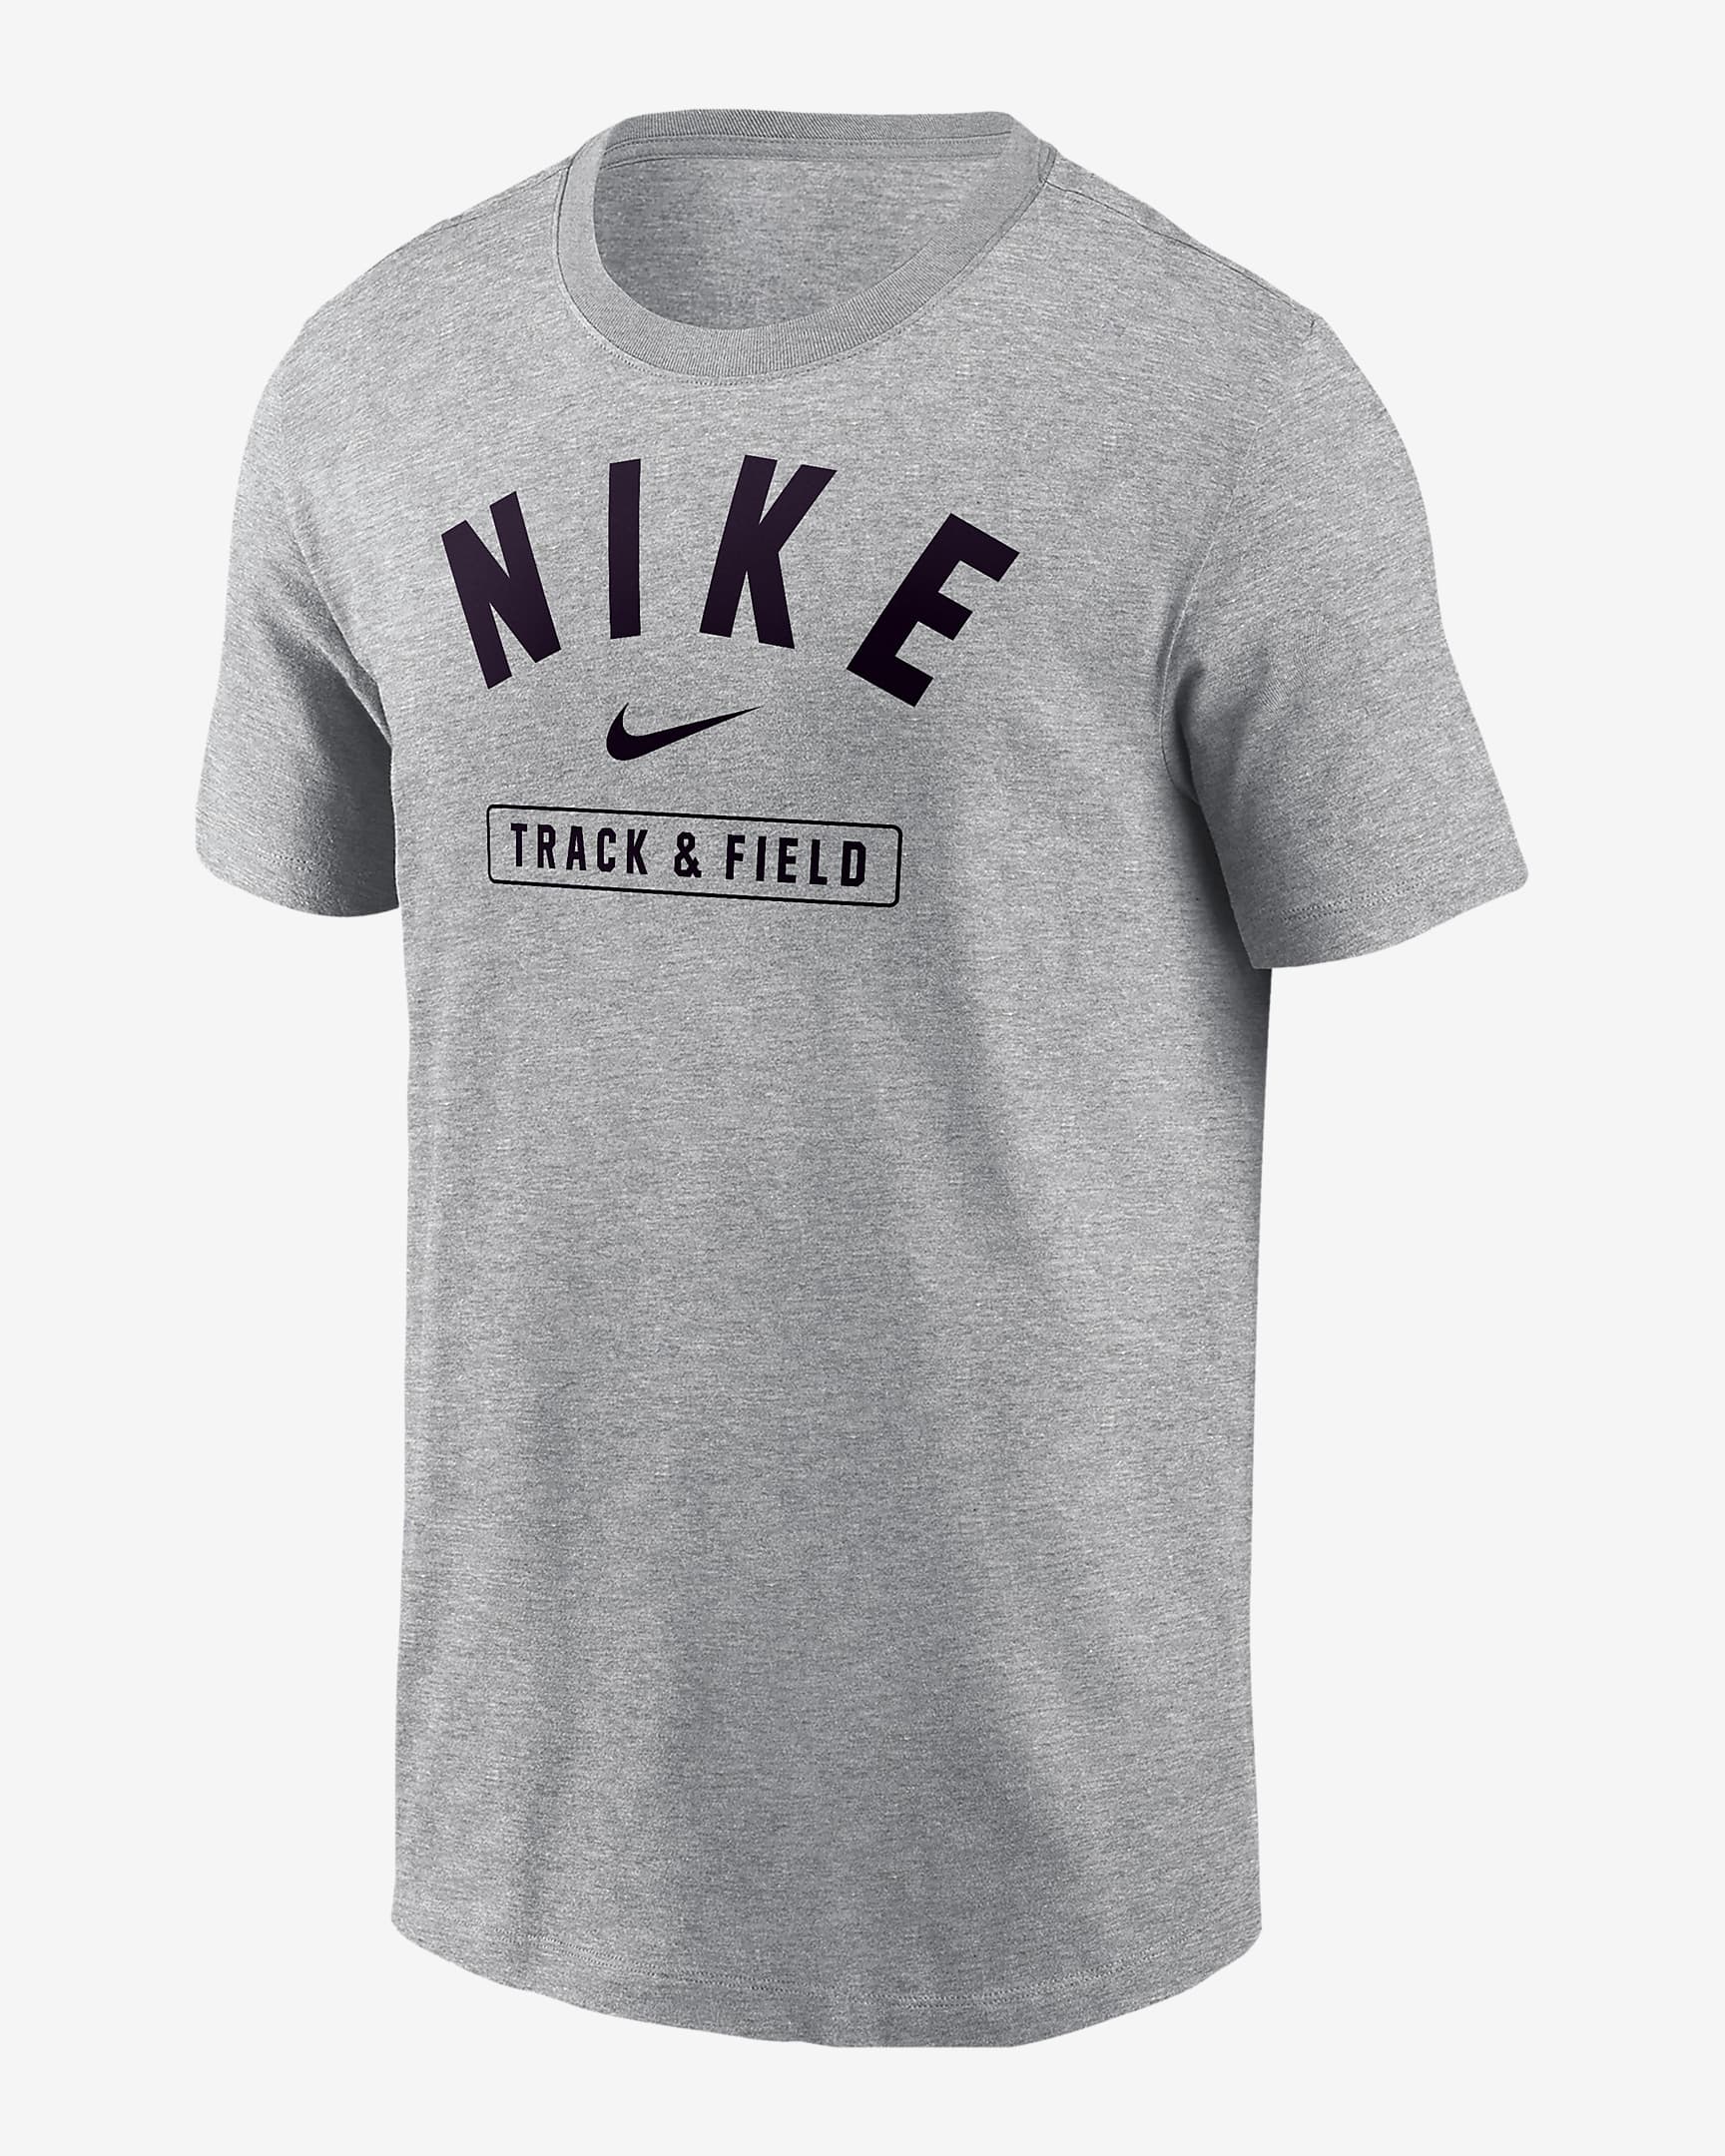 Nike Men's Track & Field T-Shirt. Nike.com